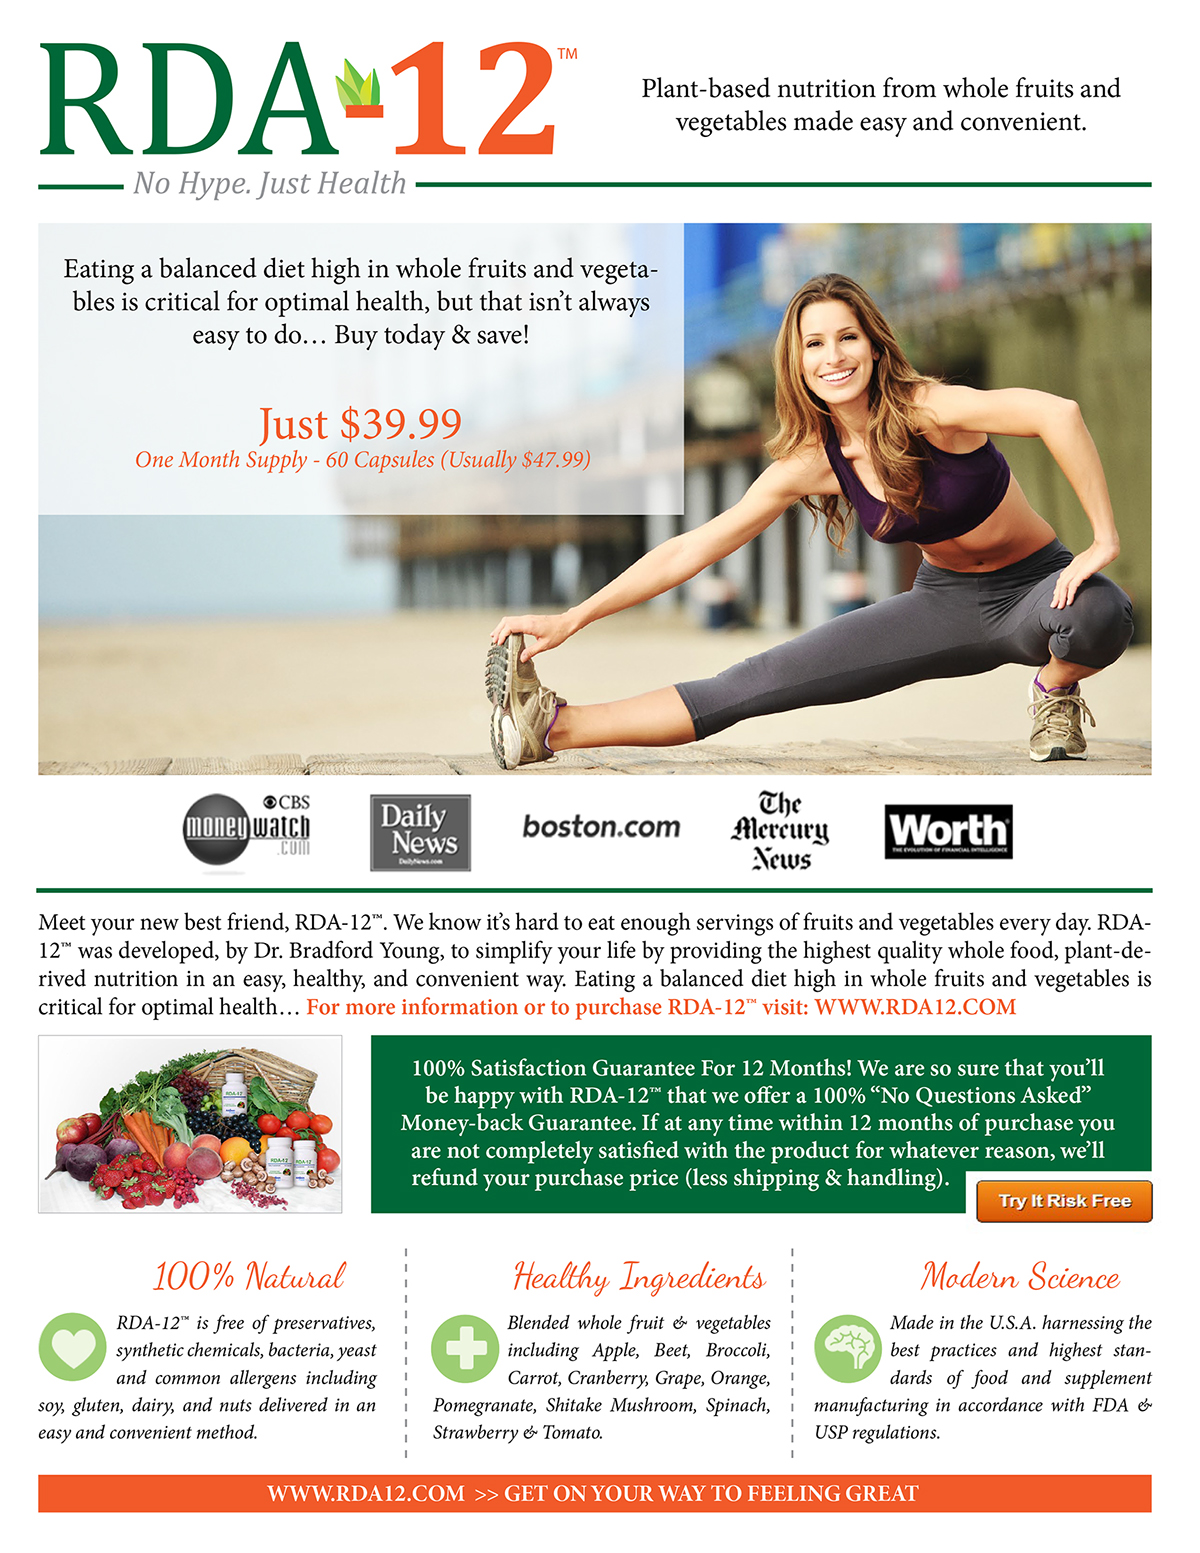 Health nutrition vitamins fitness Website supergreens beauty